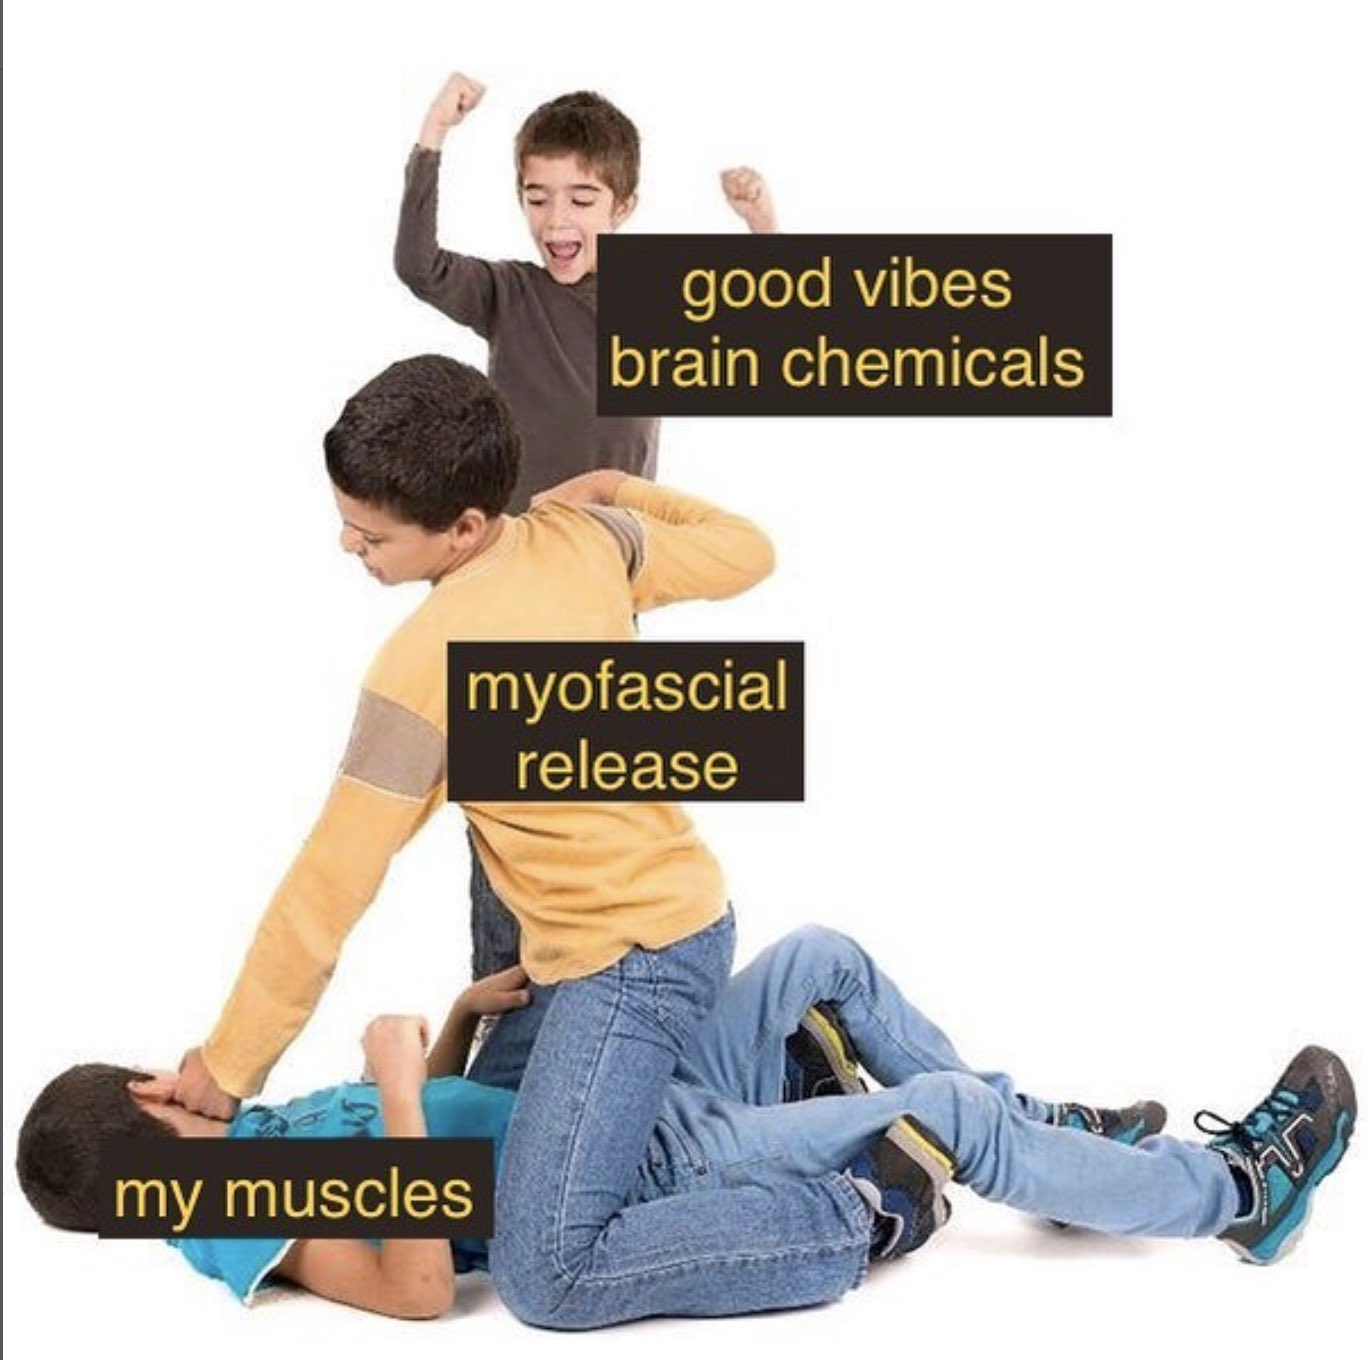 myofascial release dancing meme